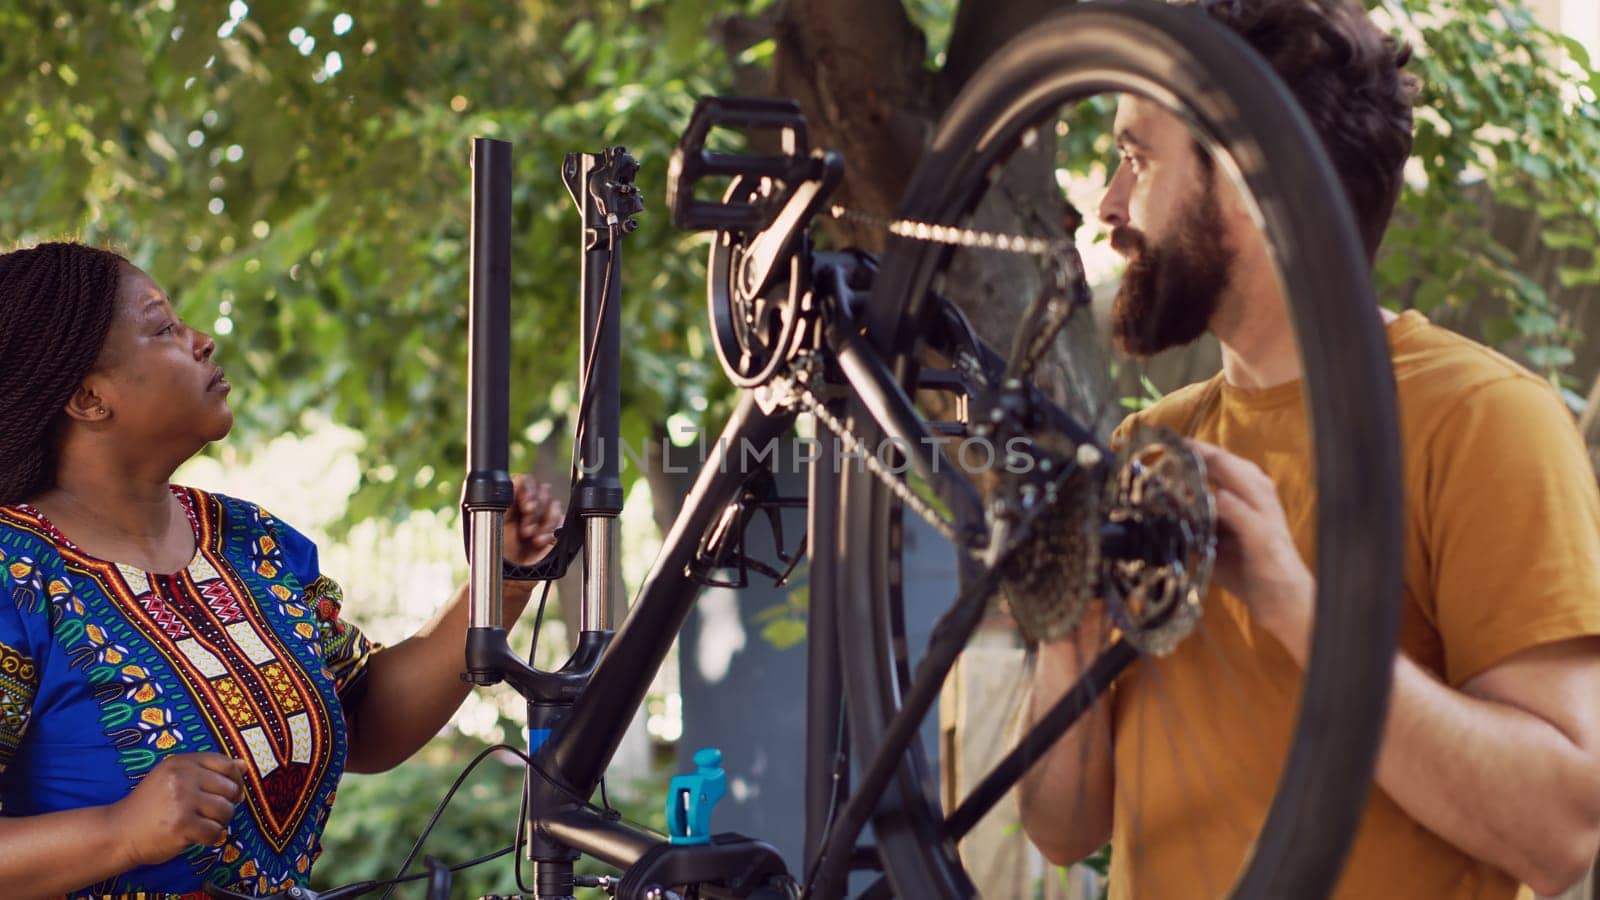 Multiracial pair inspects broken bicycle by DCStudio